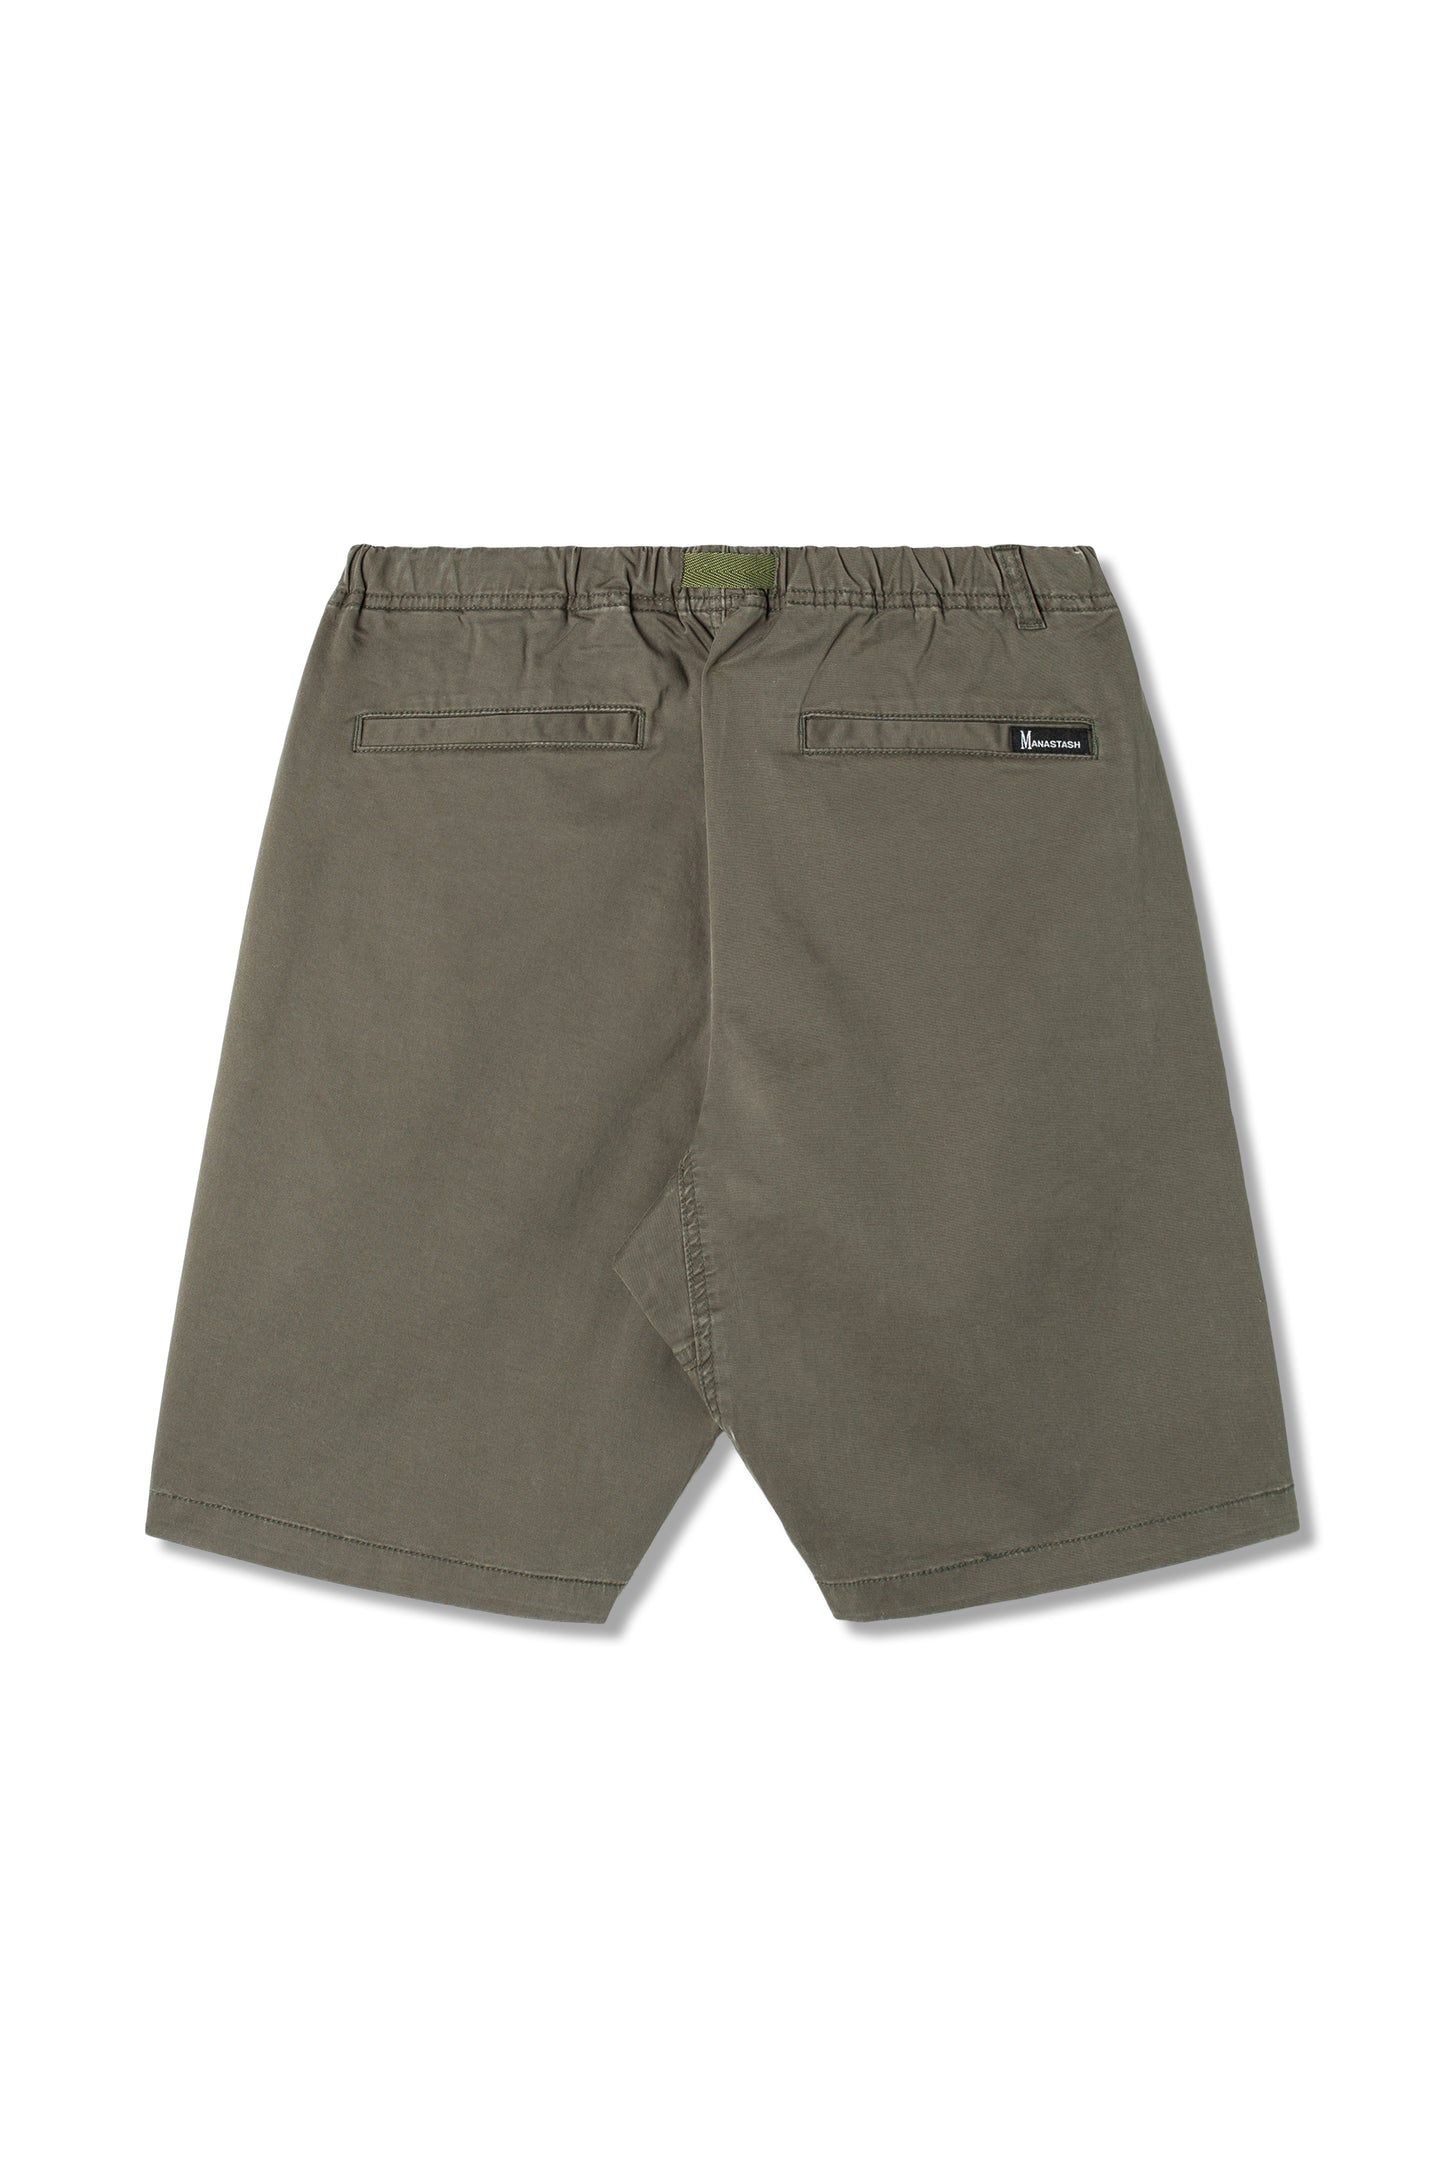 Flex Climber Shorts (Olive)